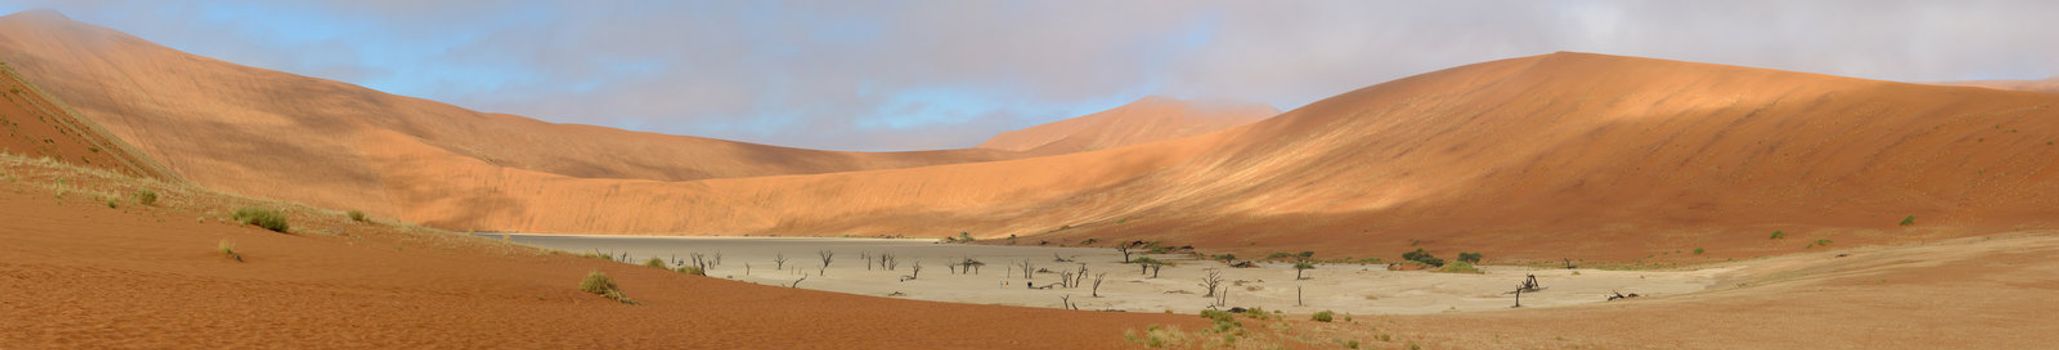 Panorama from four photos at Deadvlei near Sossusvlei,  Namibia